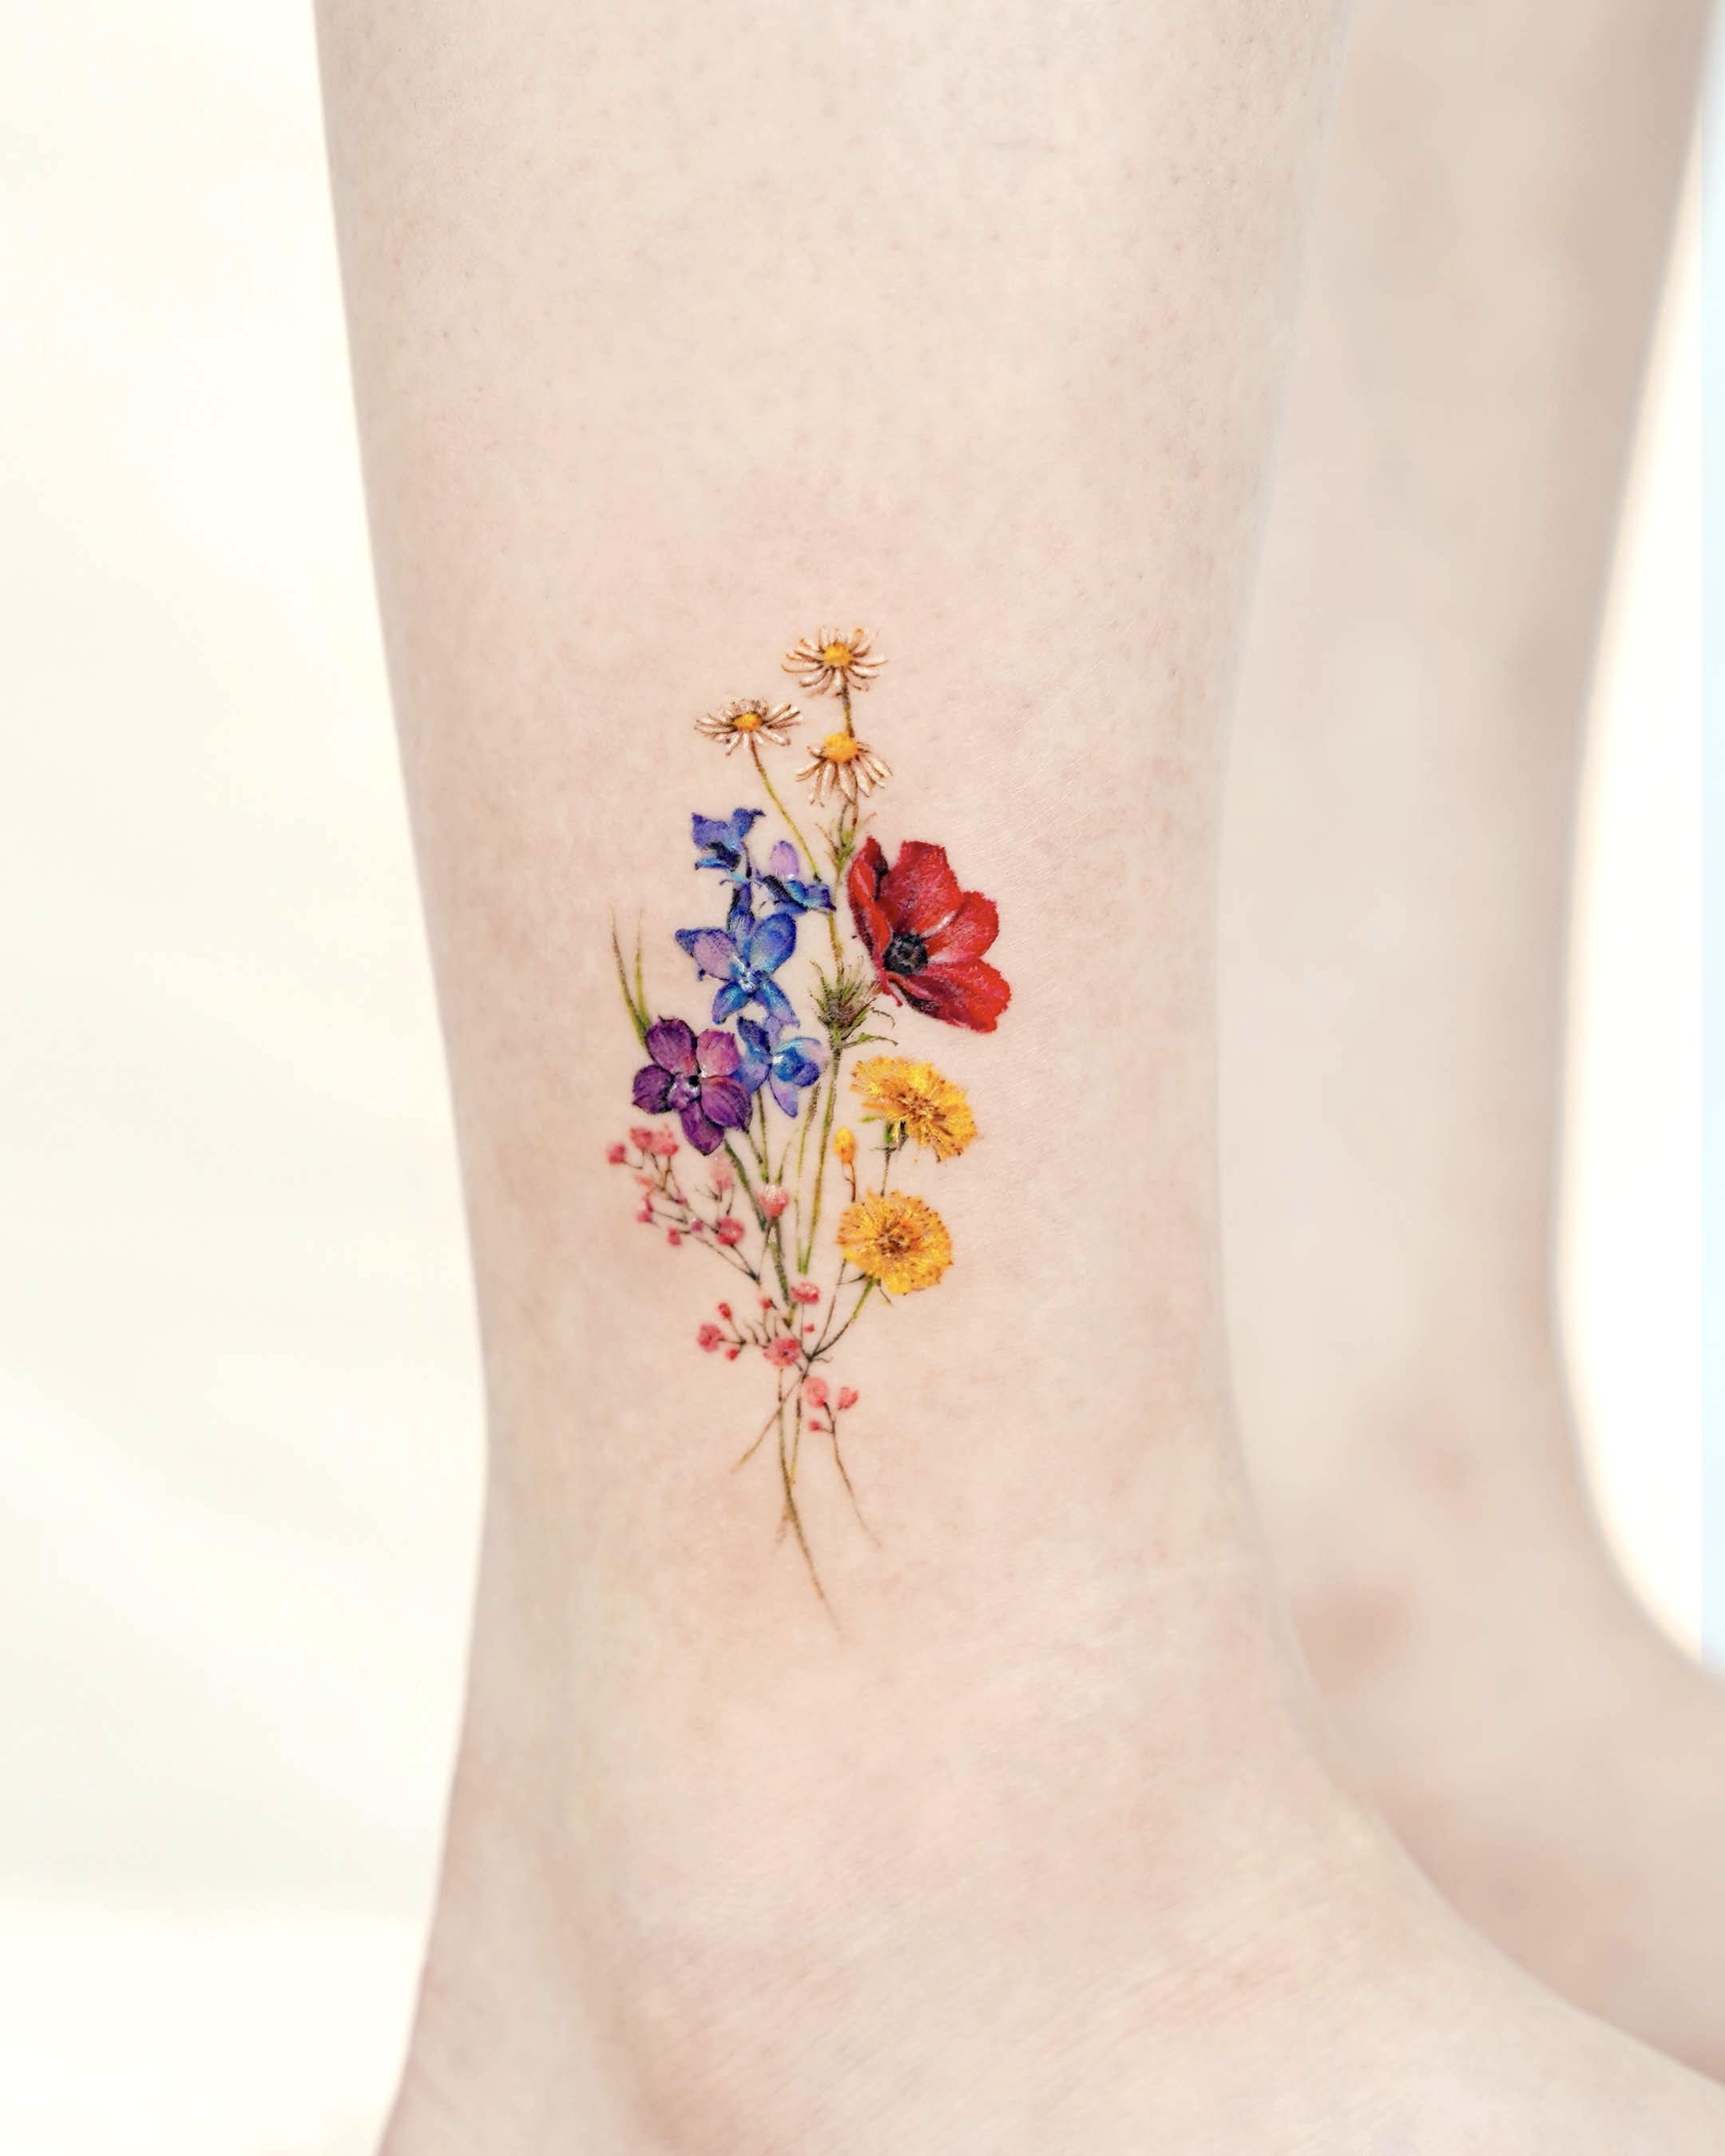 Tattoology Studio - Delicate Flower Ankle Tattoo... #tattoo #ankletattoo  #legtattoo #flowerstattoo #flowertattoo #delicateflower #ankletattoo #anklet  #ankle #tattoos #foottattoo #leg #tattooforgirls #girlstattoo #tattoolife  #tattoostyle #inkedgirls ...